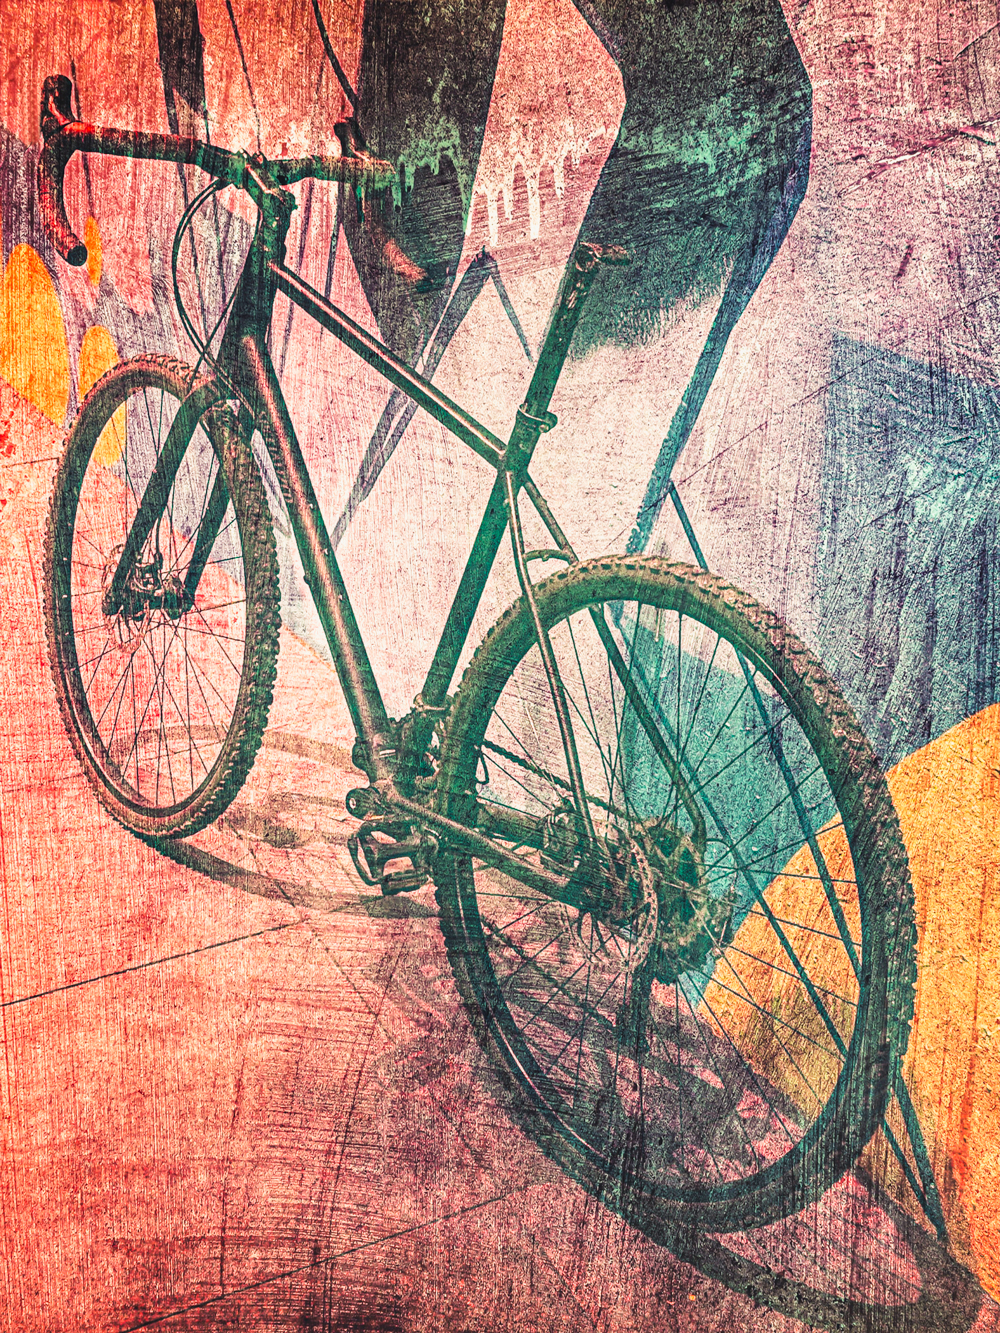 36 - Hipster Bike by Neil Milne ARPS